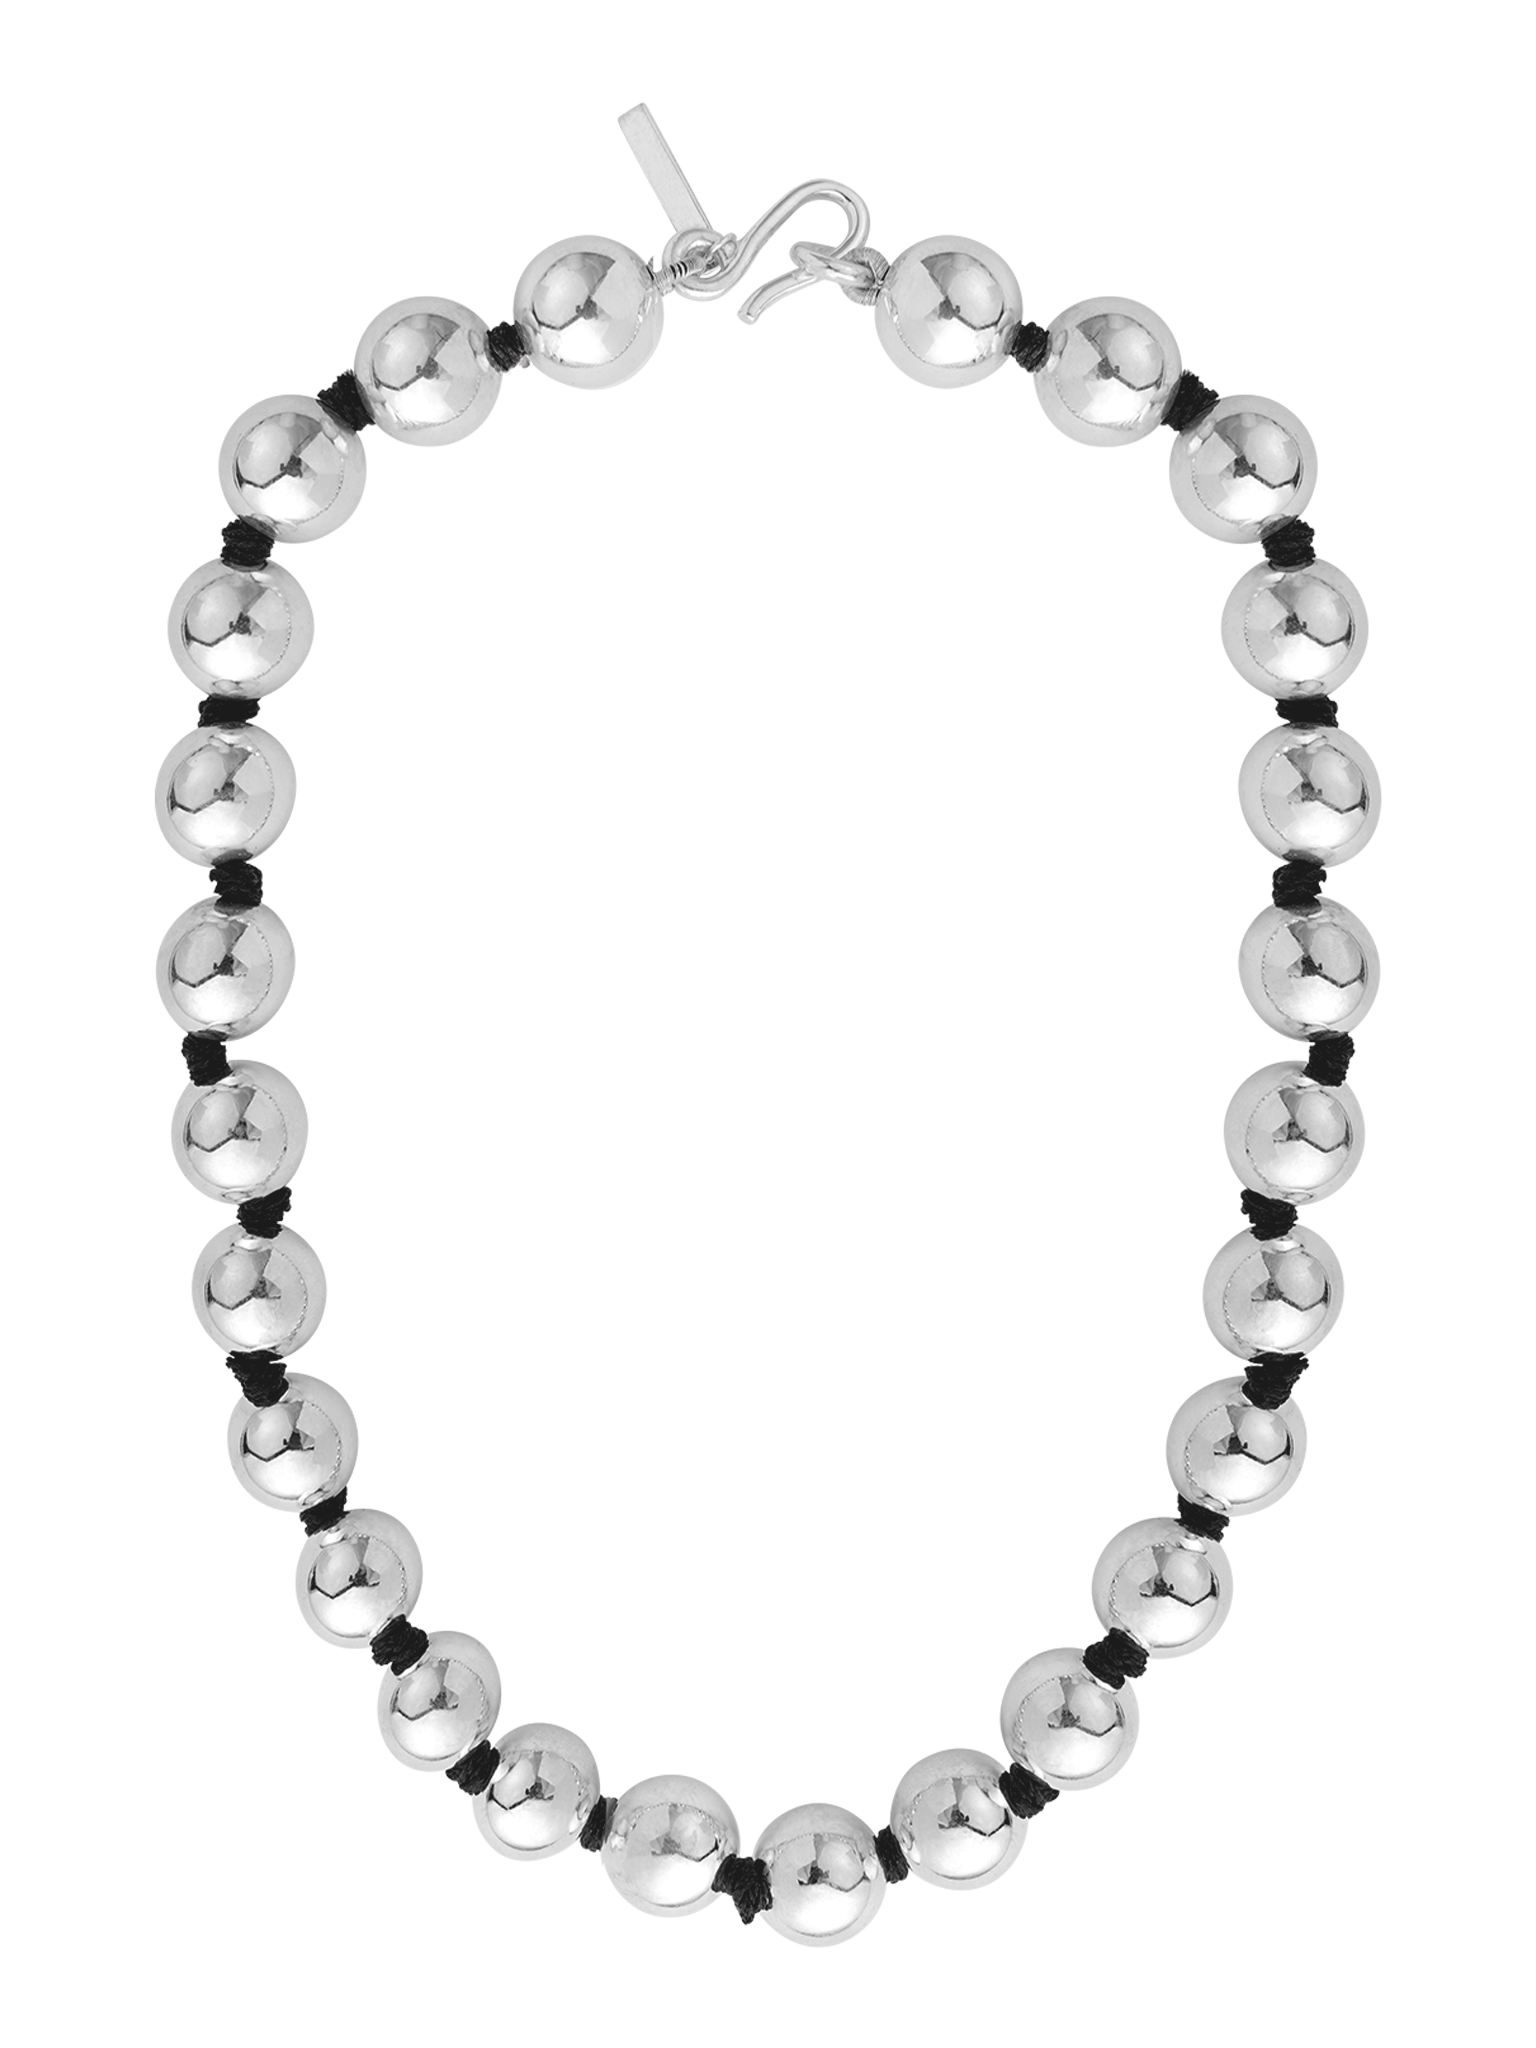 Orb Collar (Refurbished)